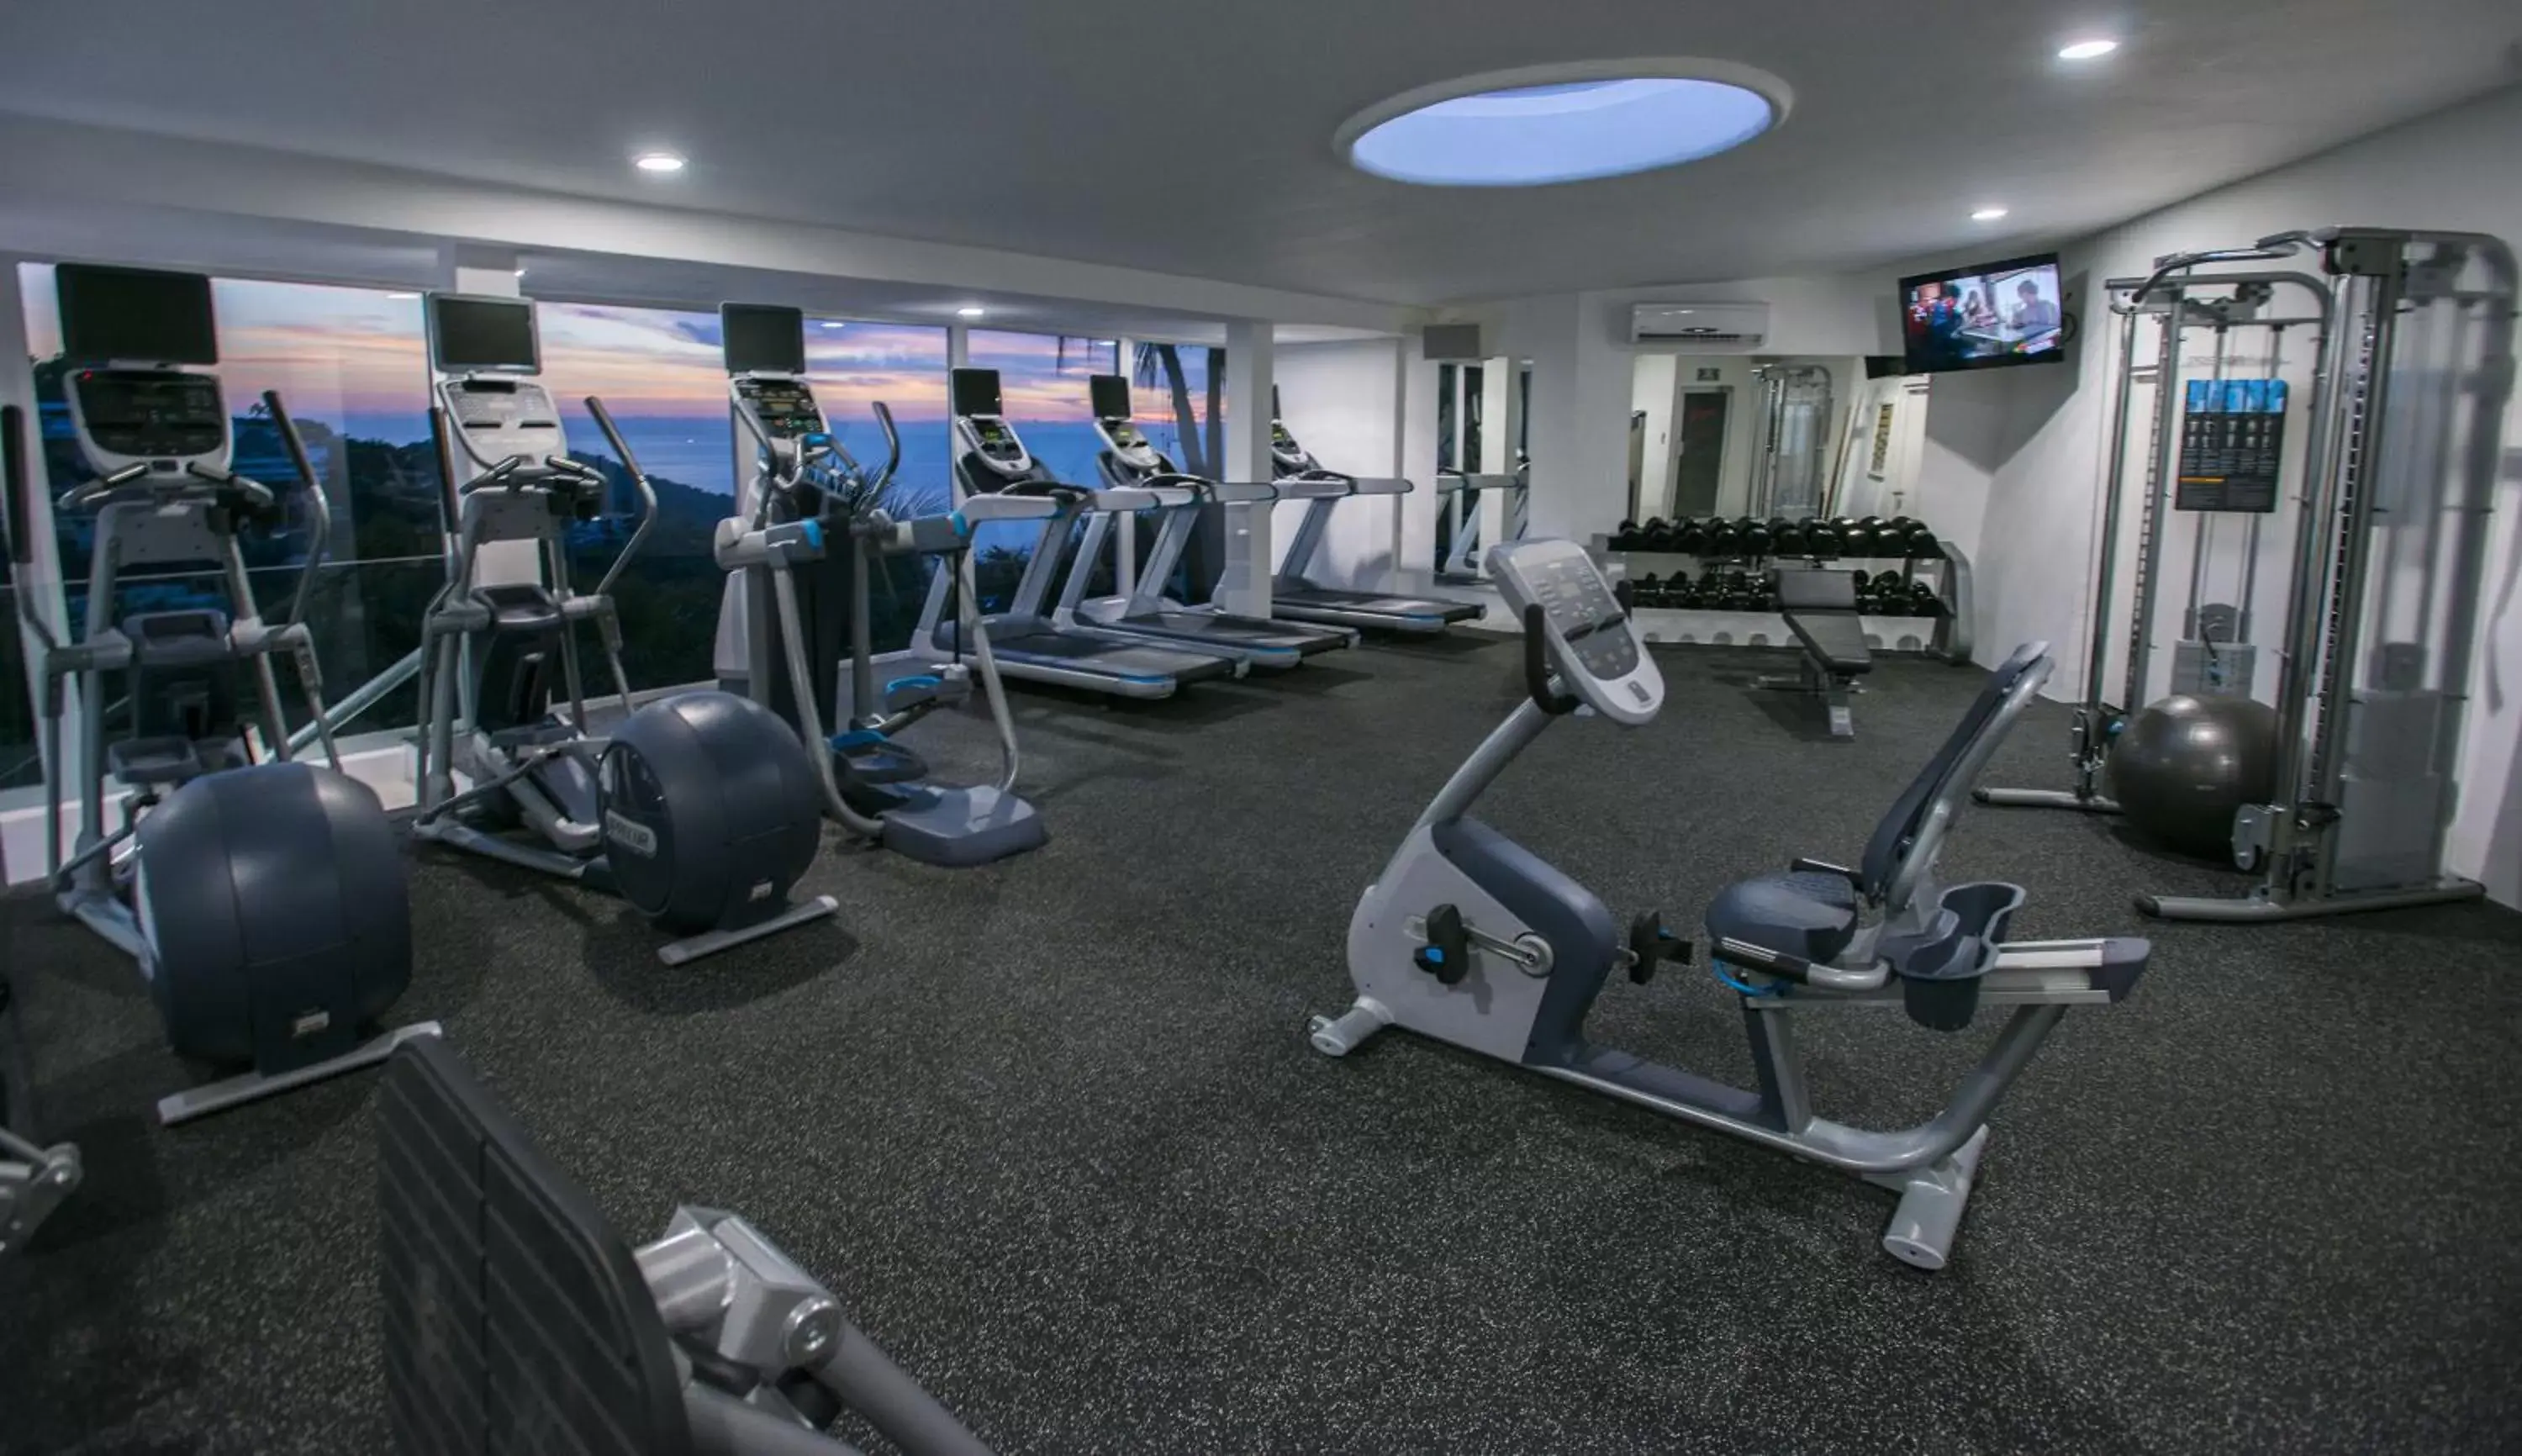 Fitness centre/facilities, Fitness Center/Facilities in Las Brisas Acapulco